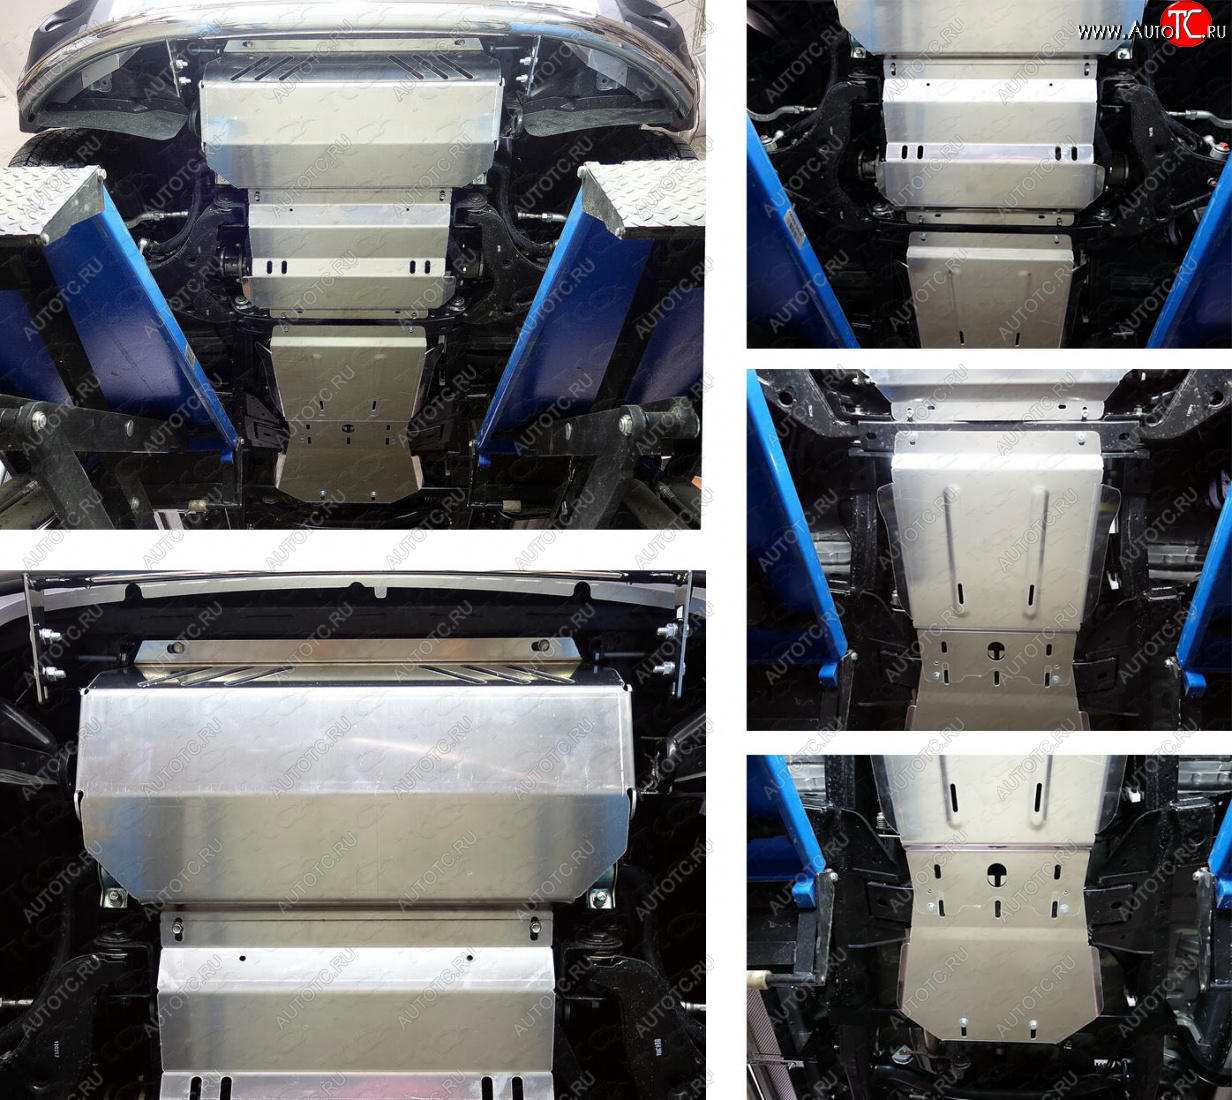 23 499 р. Защиты комплект (радиатор, картер, кпп, рк) ТСС Тюнинг  Mitsubishi Pajero Sport ( 3 QE,  3 QF) (2015-2022) (алюминий 4 мм)  с доставкой в г. Калуга